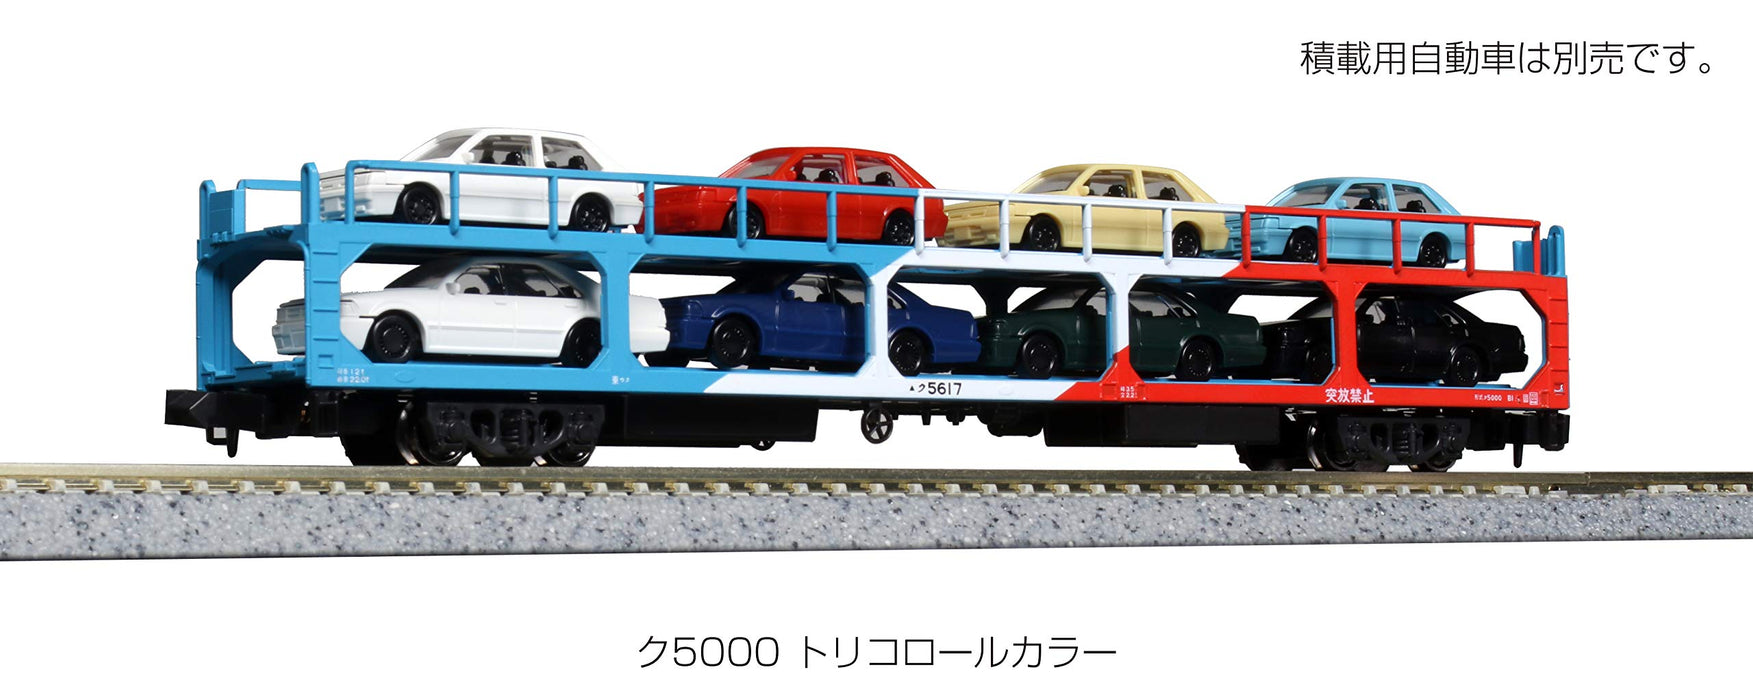 Kato Tricolor N Gauge Ku5000 8078-7 Freight Car - Railway Model